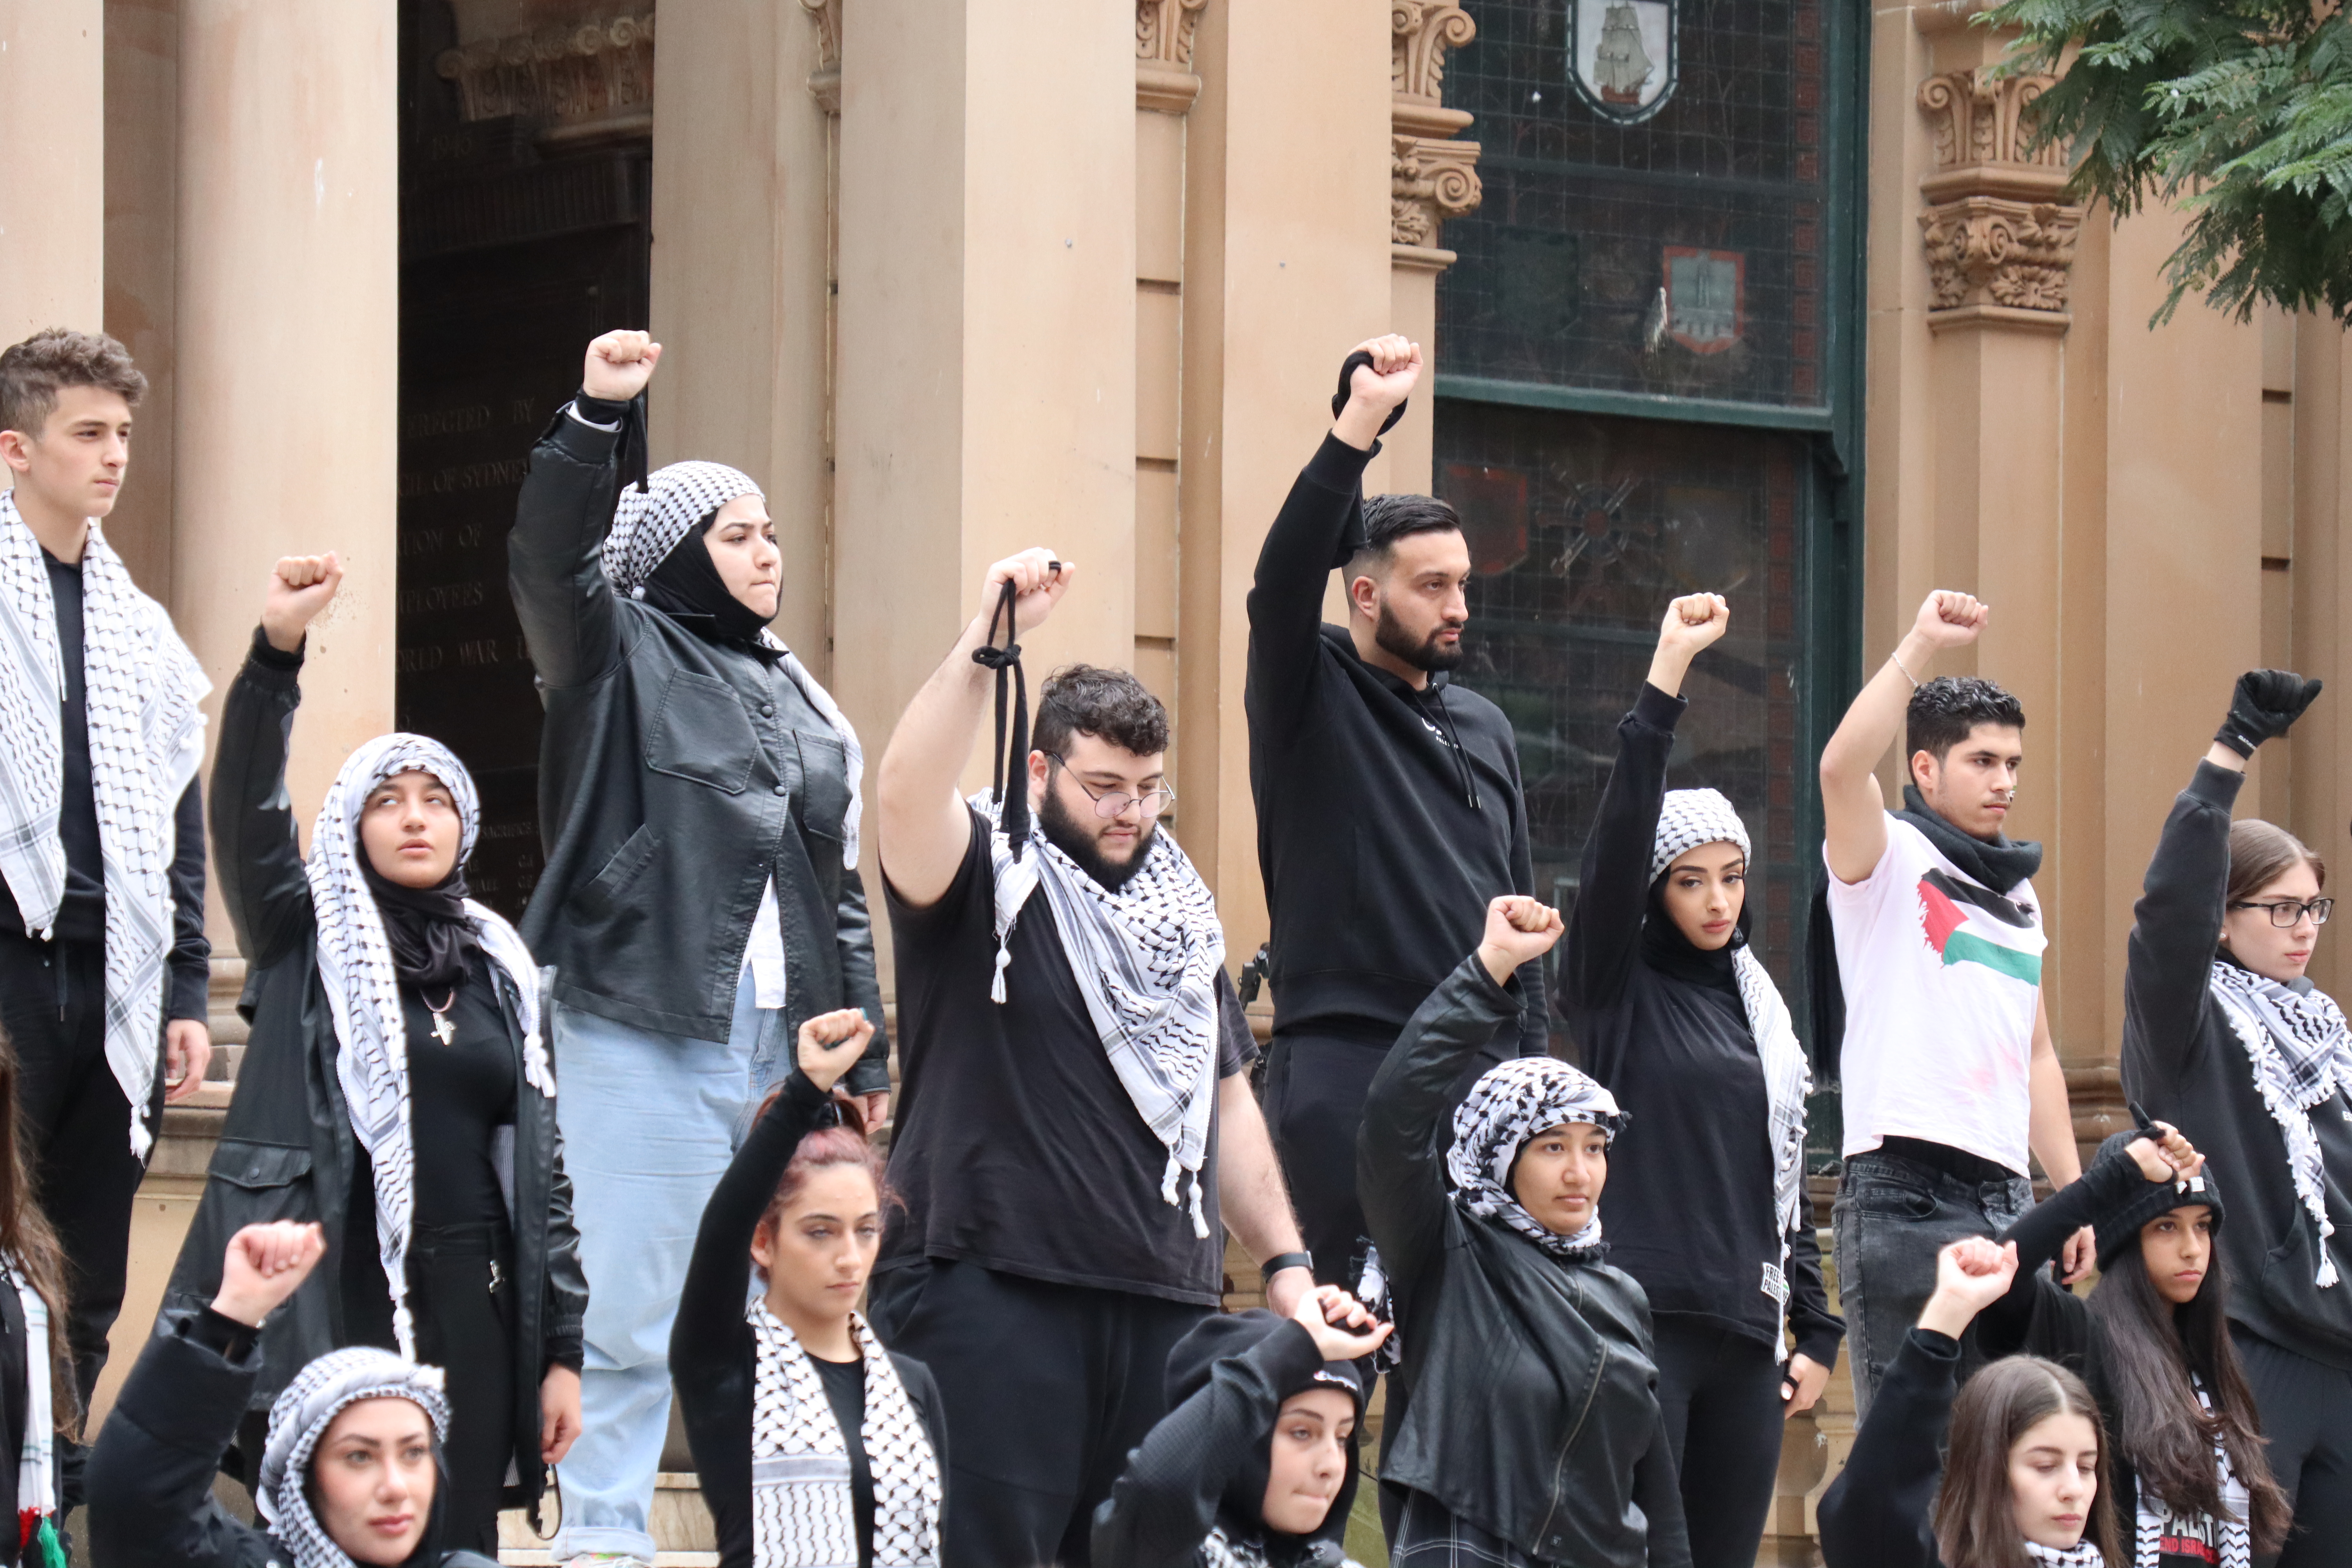 Palestinian demonstrators in Sydney